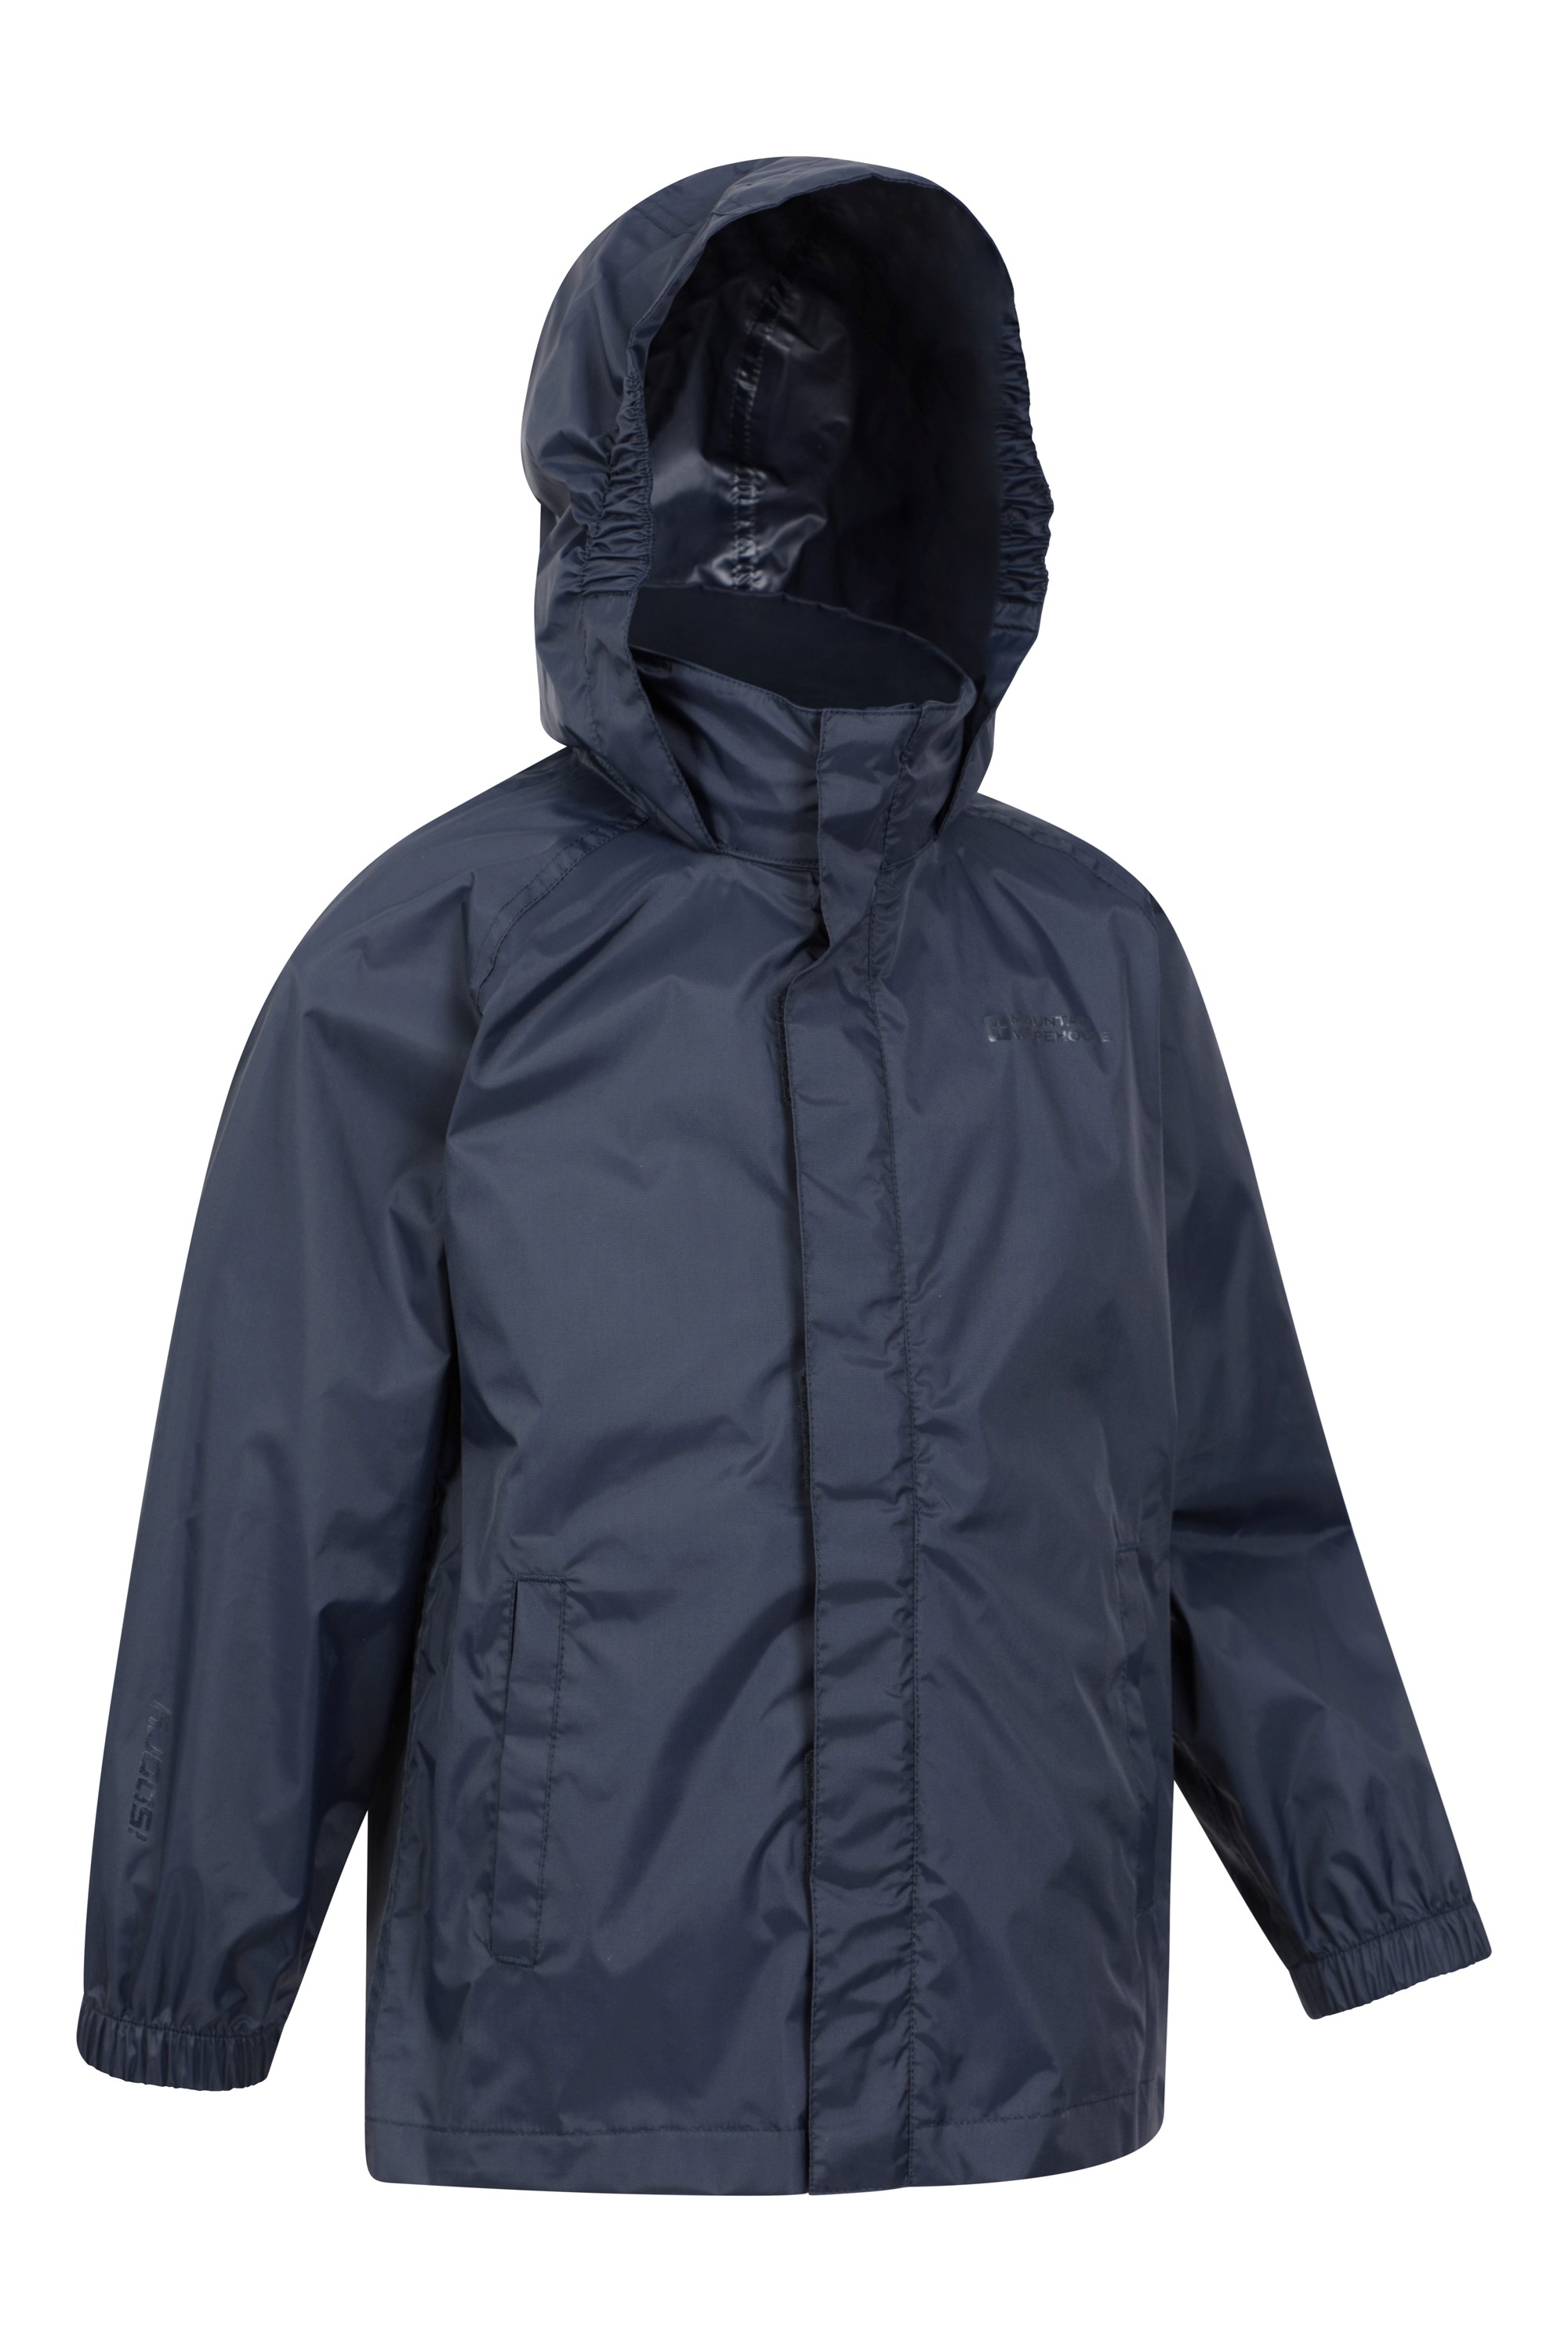 Mountain Warehouse Kids Waterproof Pakka Jacket - Adjustable Hood